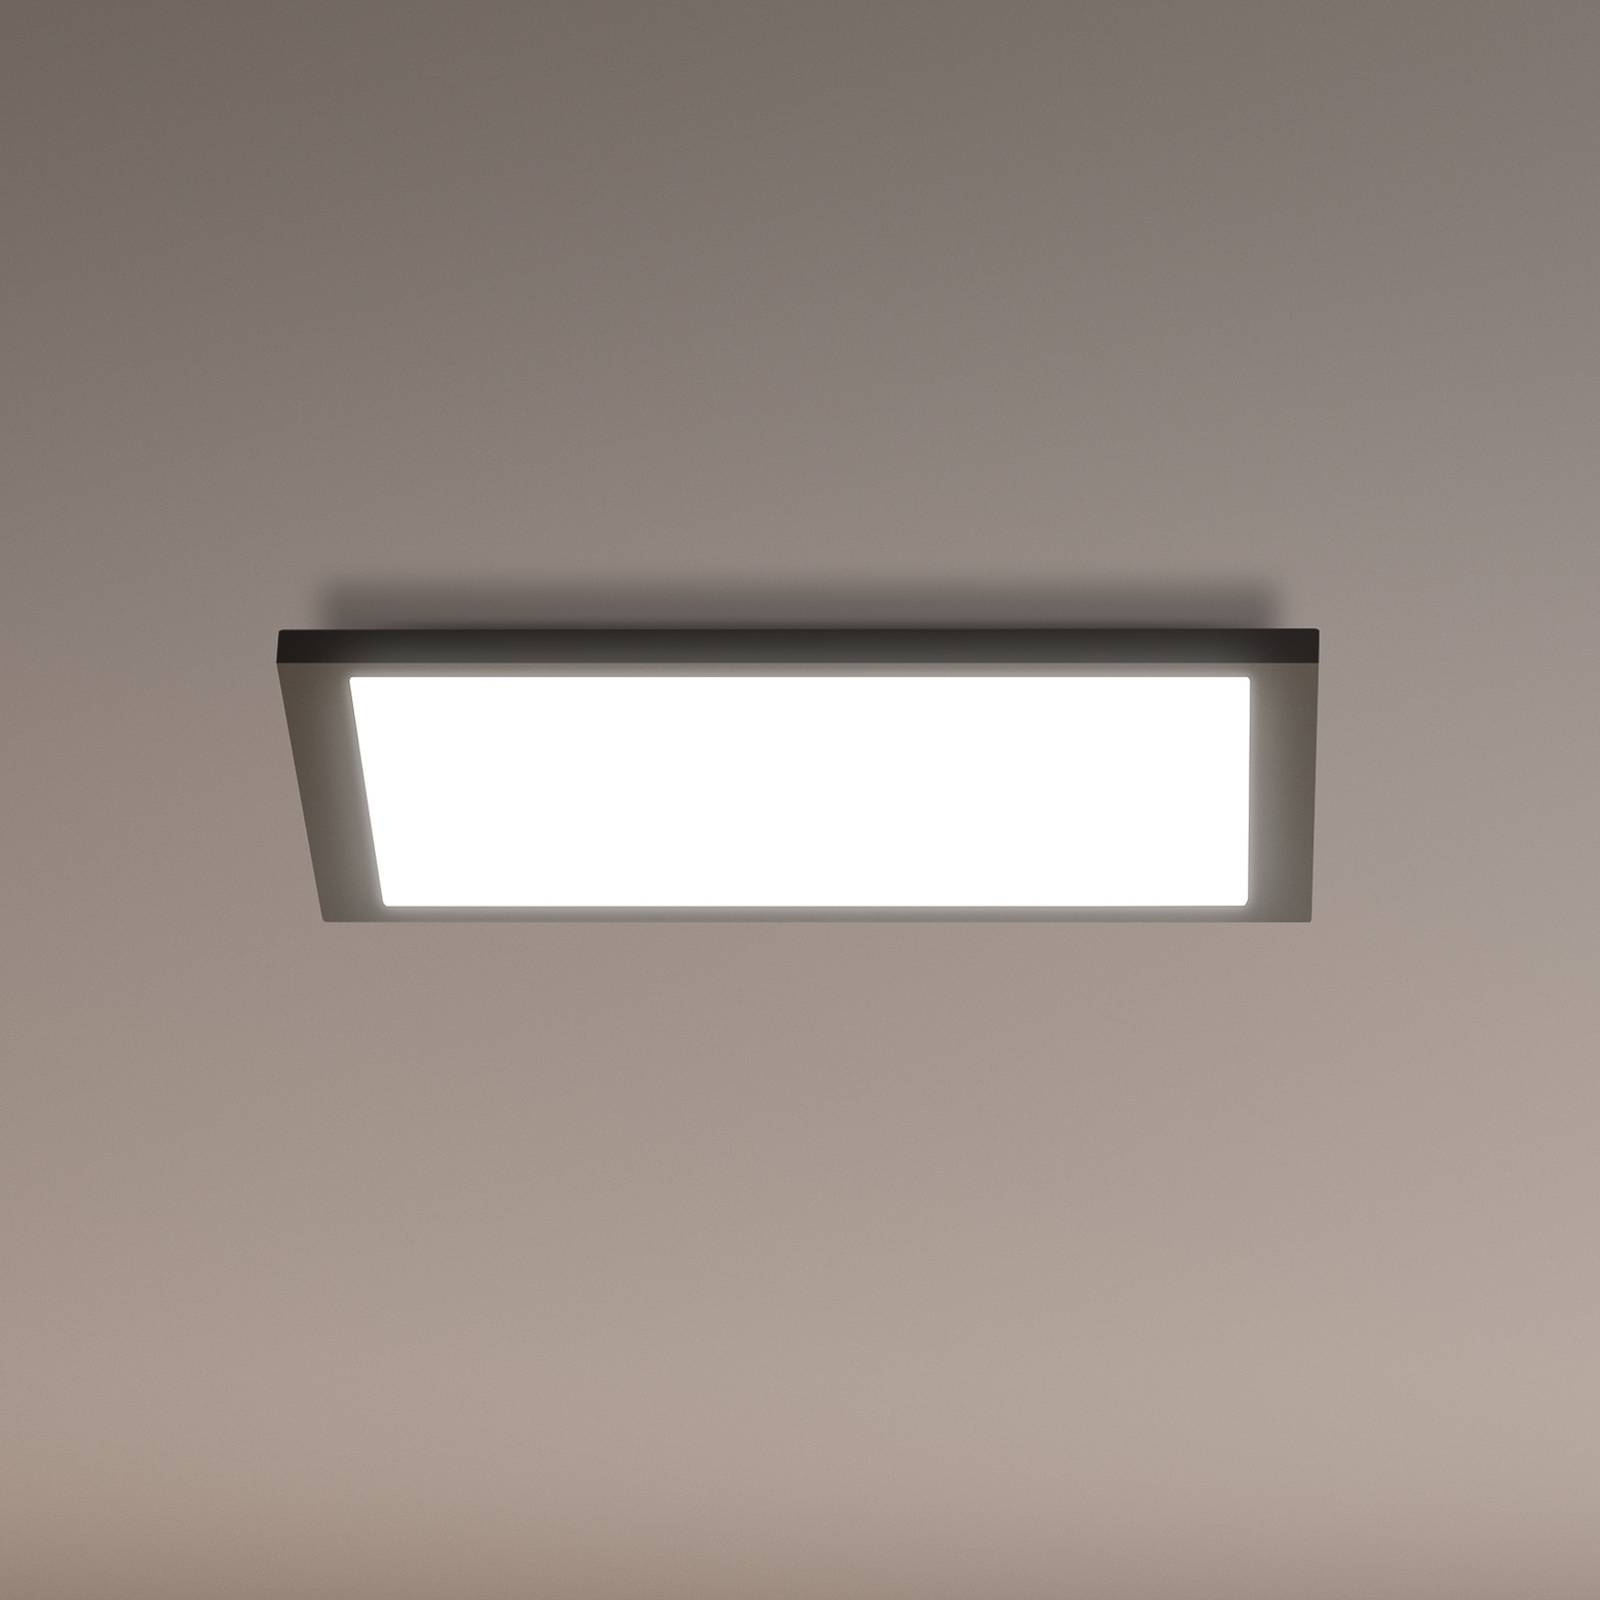 Wiz led plafondlamp paneel, zwart, 30×30 cm